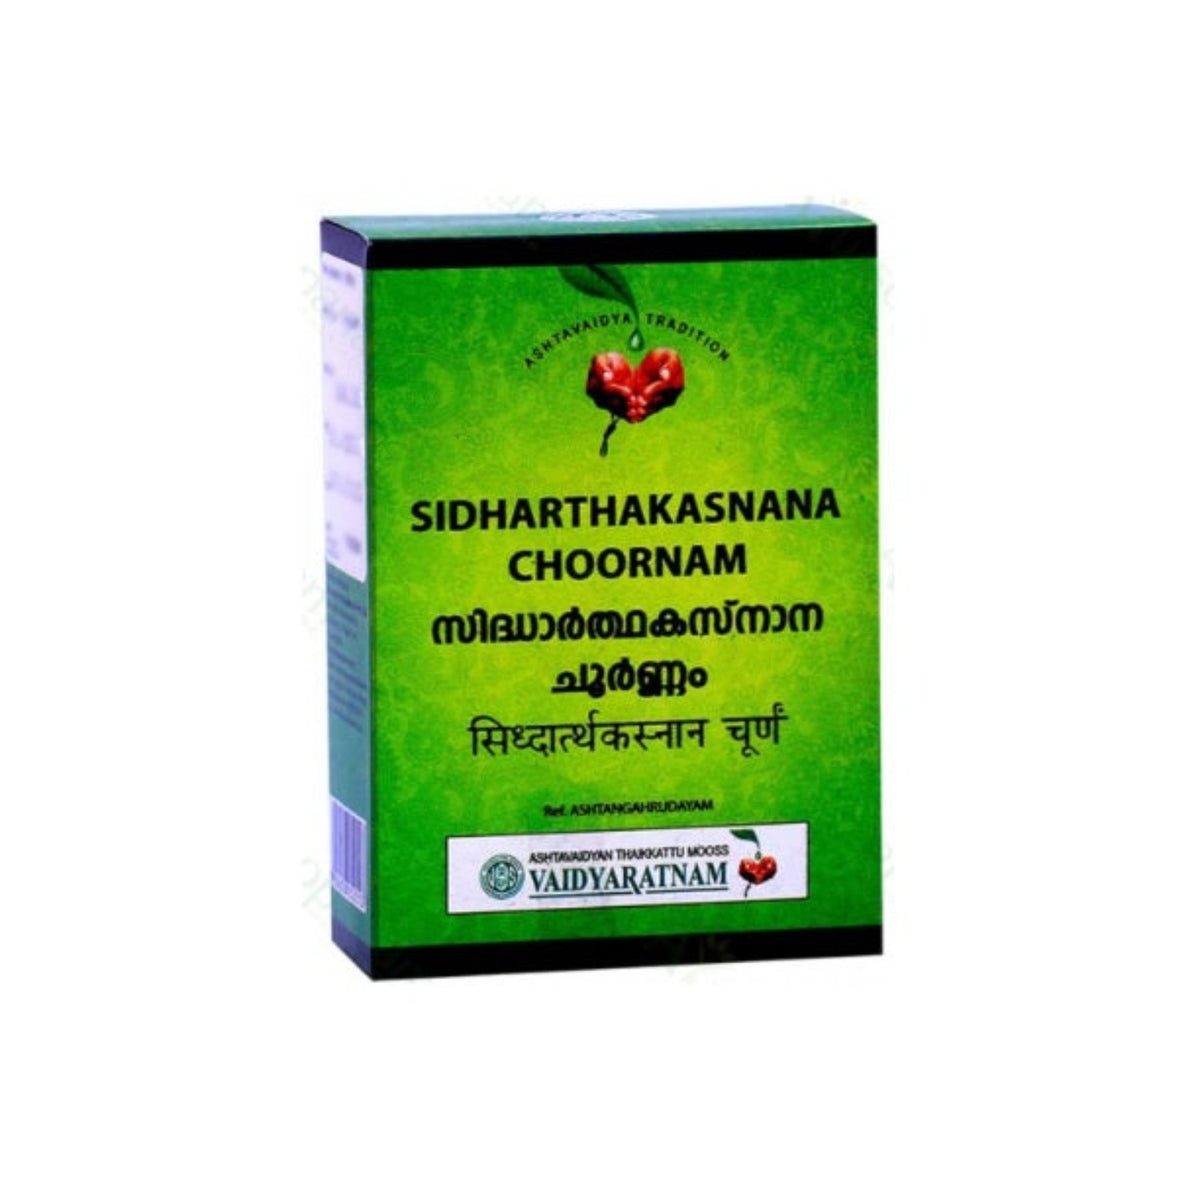 Vaidyaratnam Ayurvedic Sidharthaka Snana Choornam Powder 100g